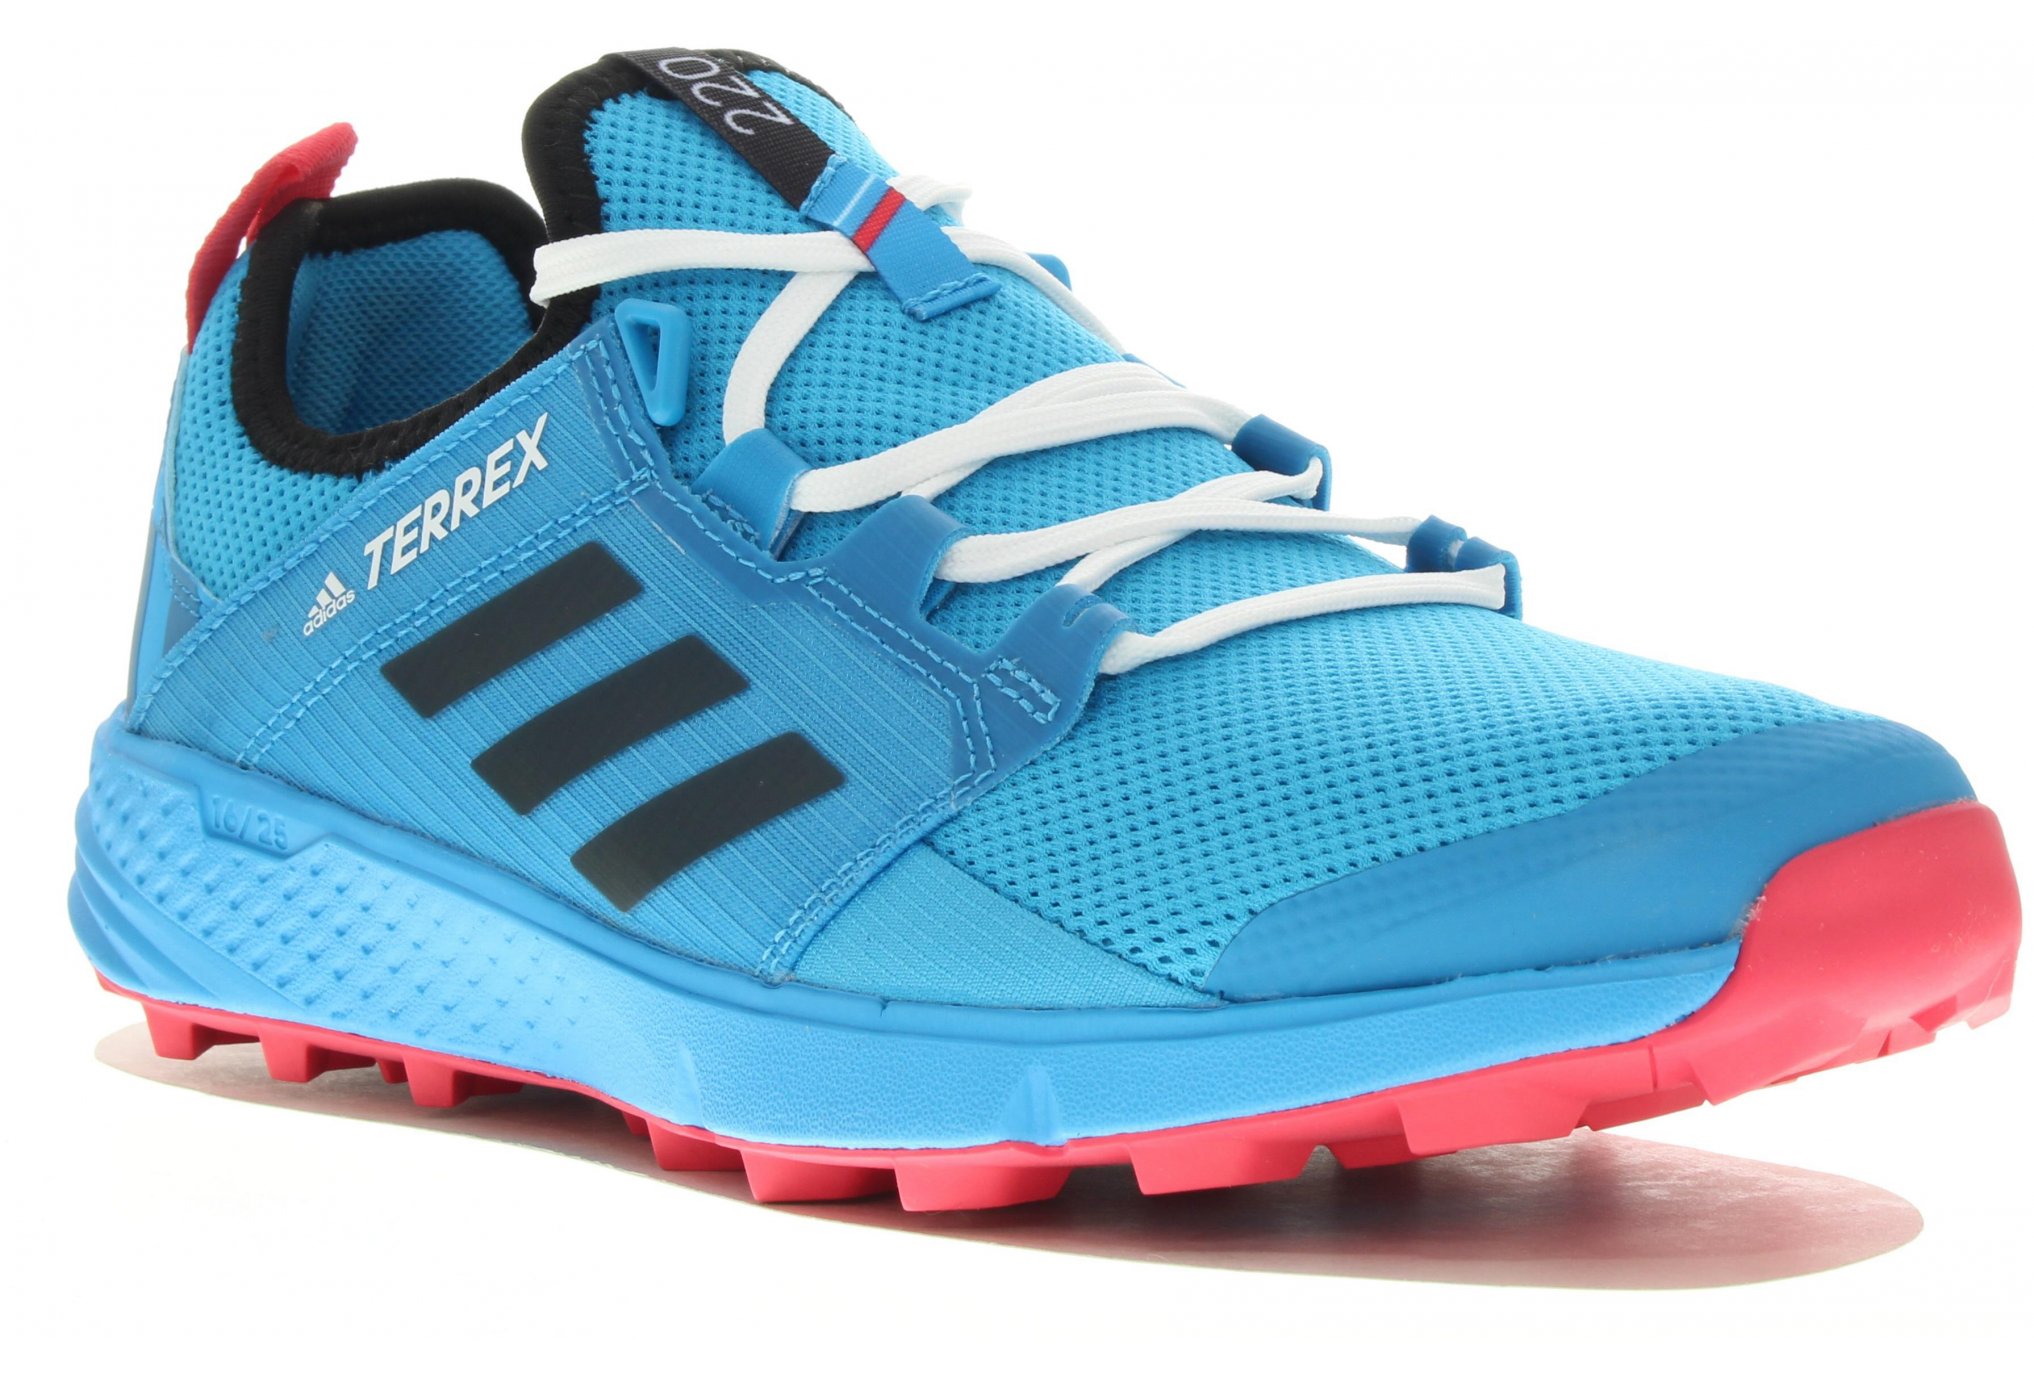 Adidas Terrex speed ld w chaussures running femme